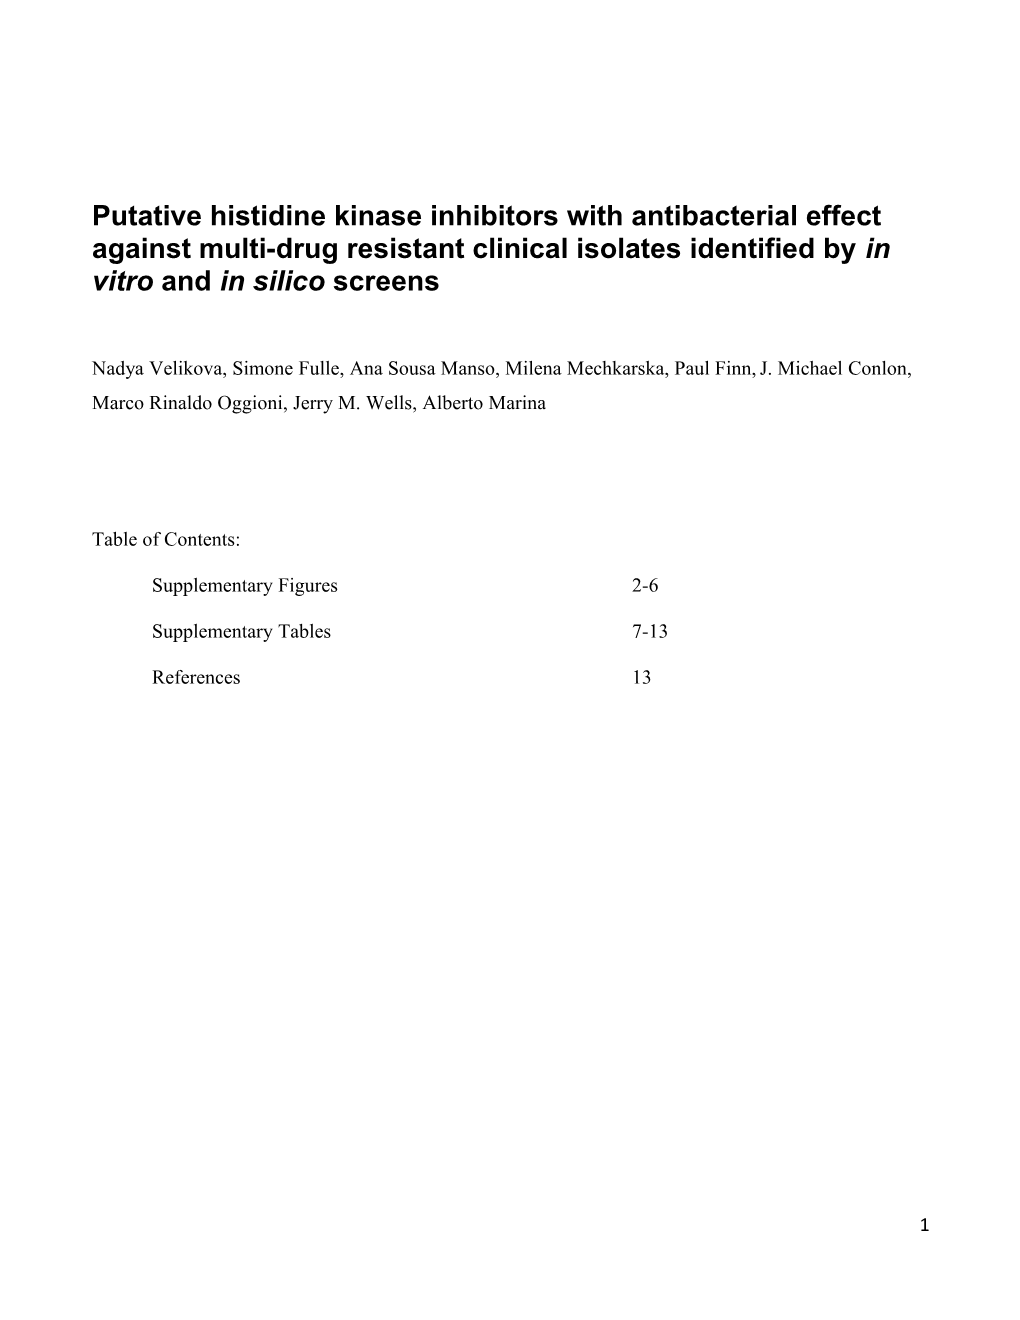 Putative Histidine Kinase Inhibitors with Antibacterial Effect Against Multi-Drug Resistant